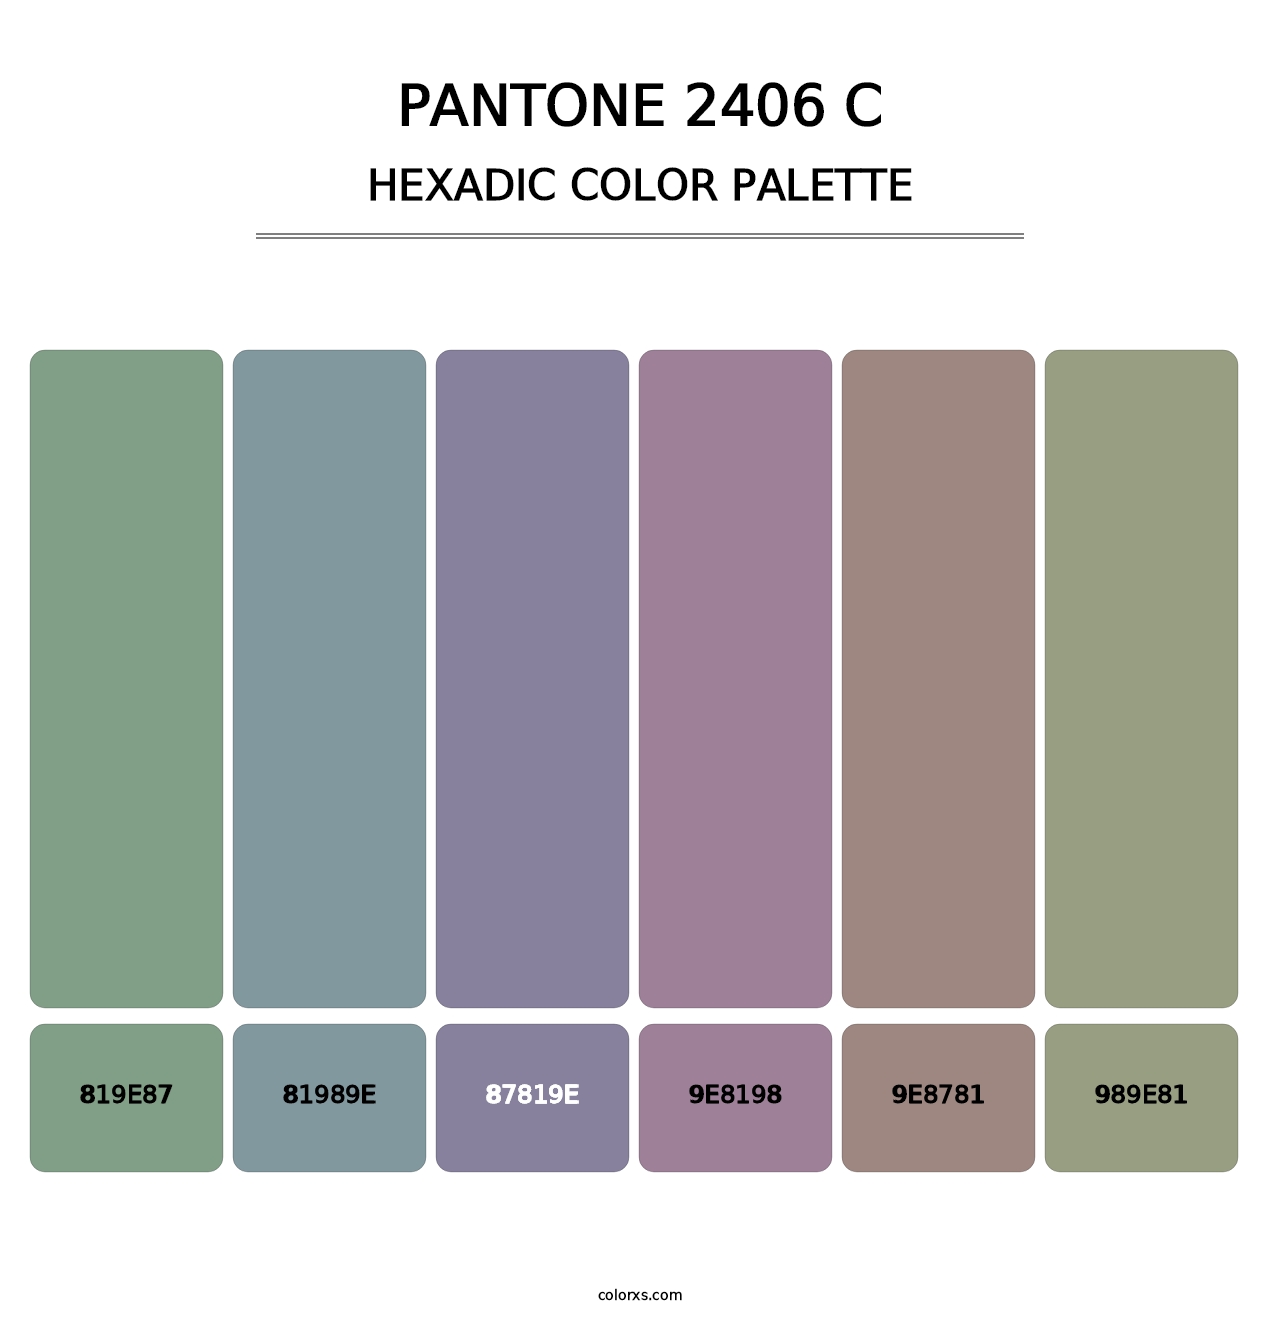 PANTONE 2406 C - Hexadic Color Palette